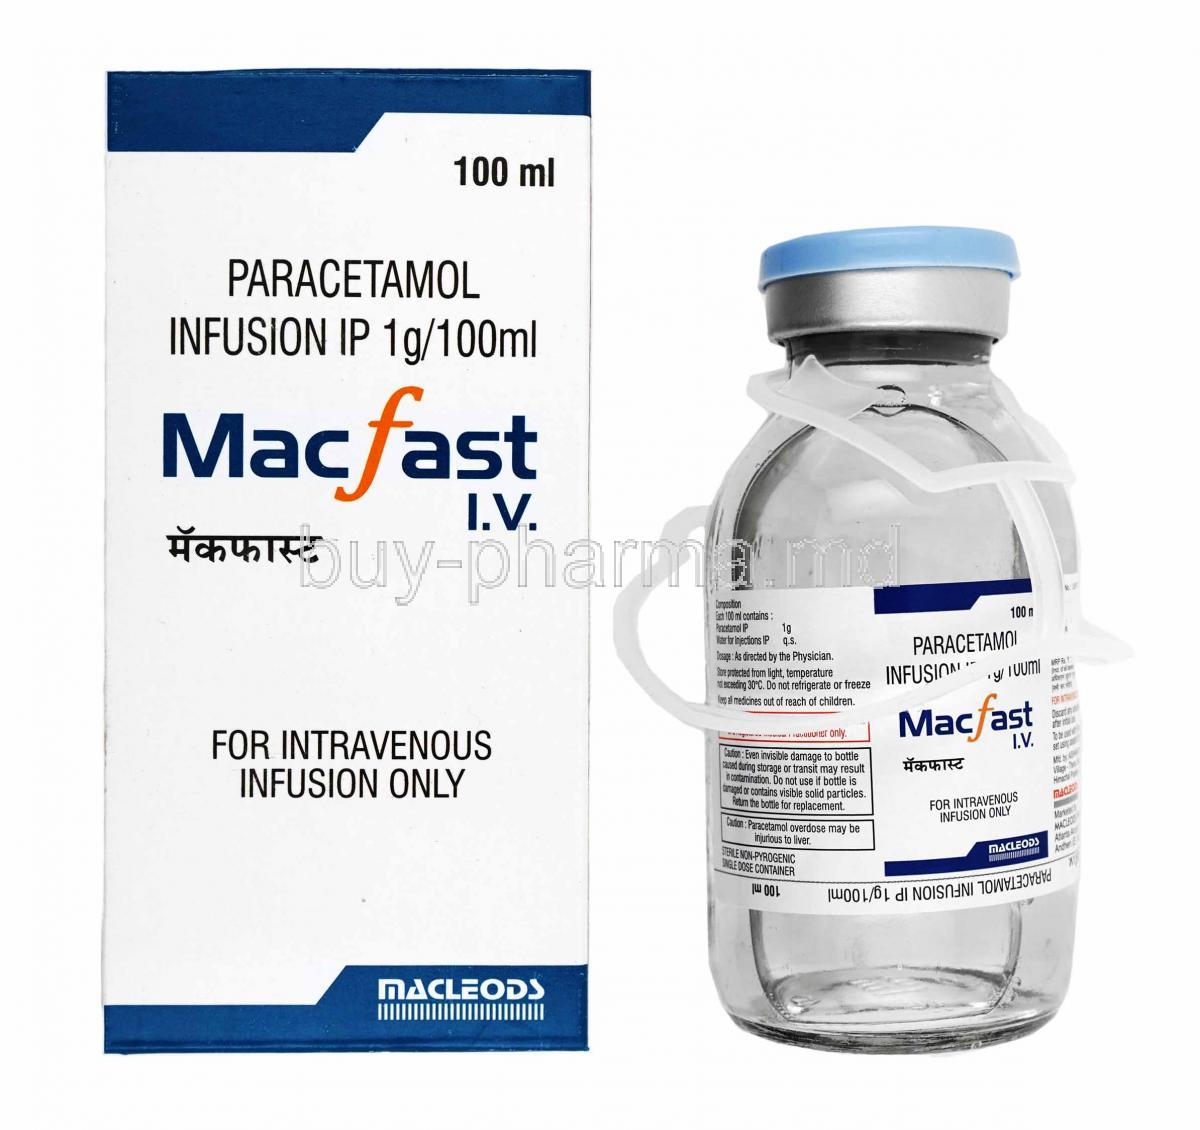 Macfast Infusion, Paracetamol box and bottle